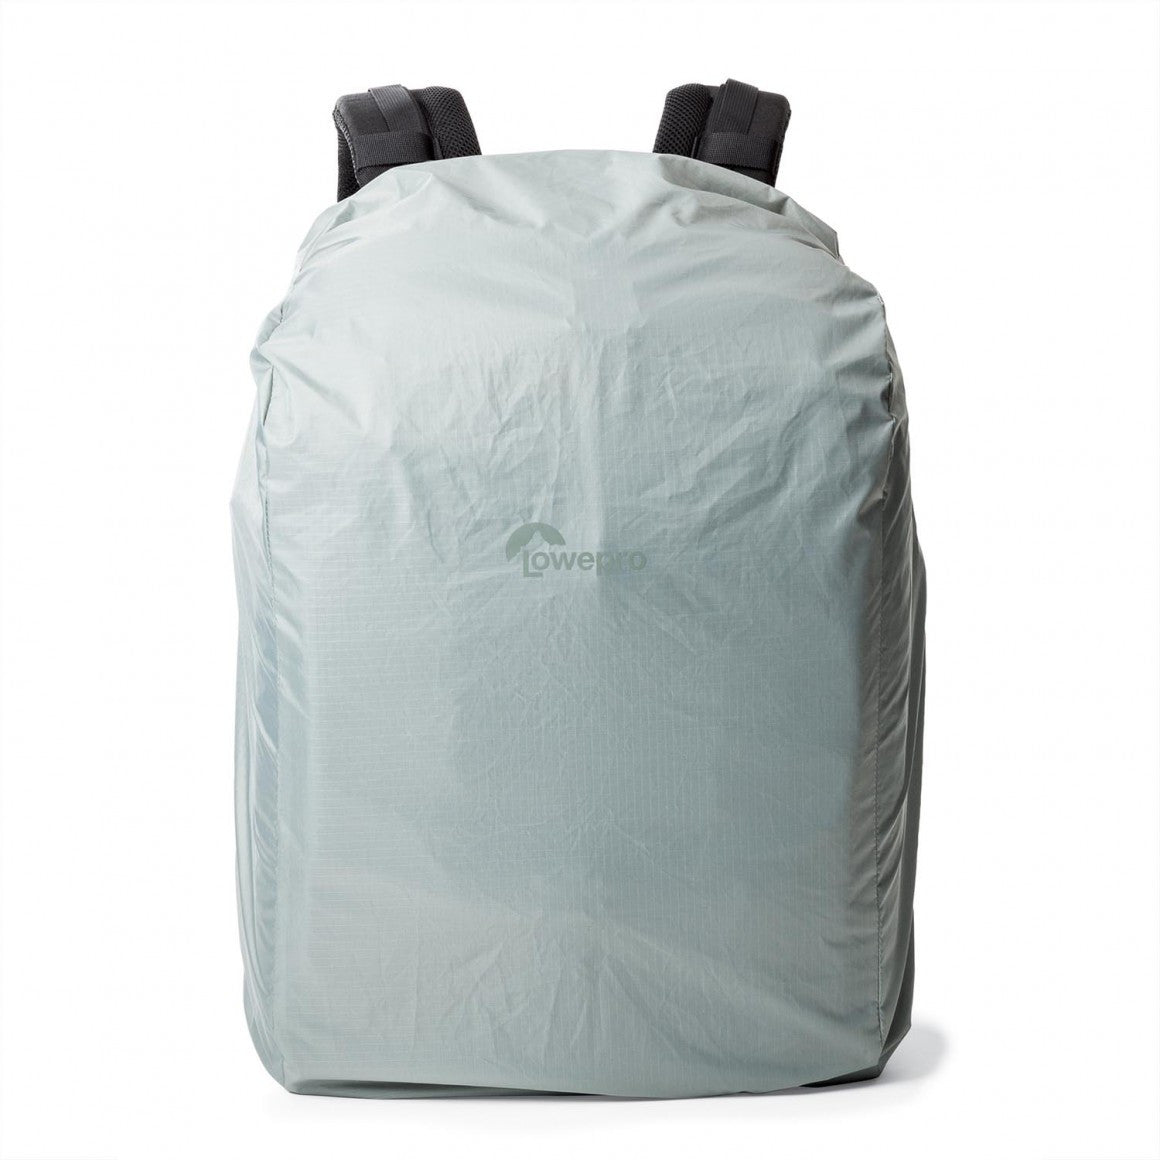 Lowepro Pro Runner 450 AW II Backpack (Black), bags backpacks, Lowepro - Pictureline  - 5